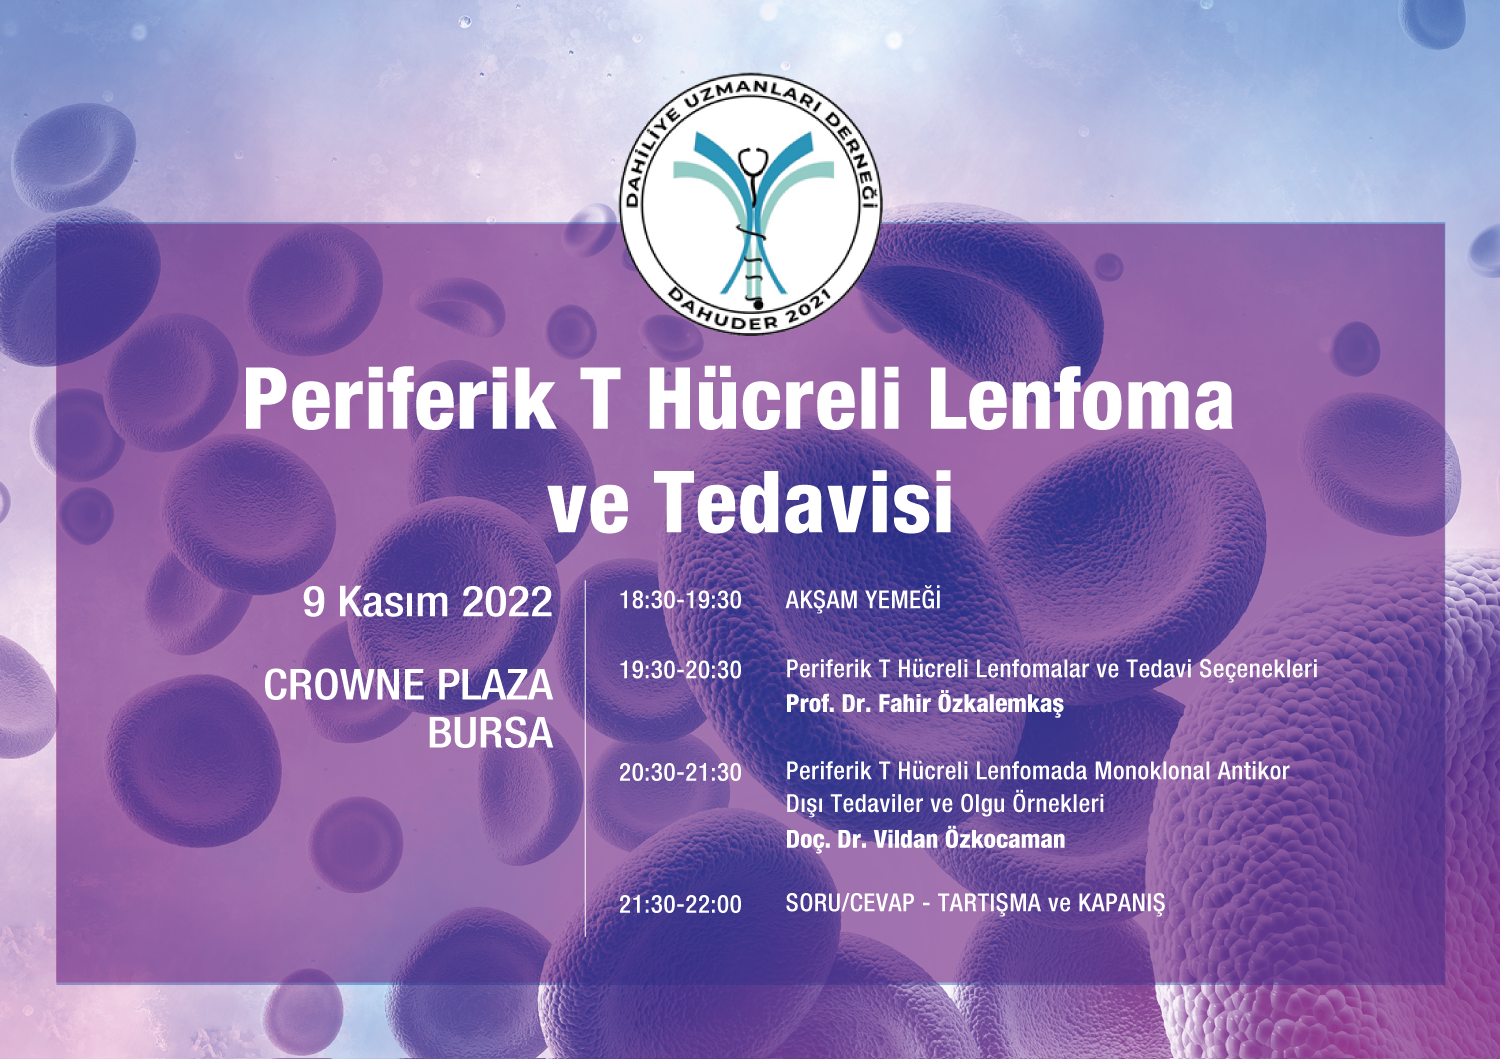 Periferik T Hücreli Lenfoma ve Tedavisi